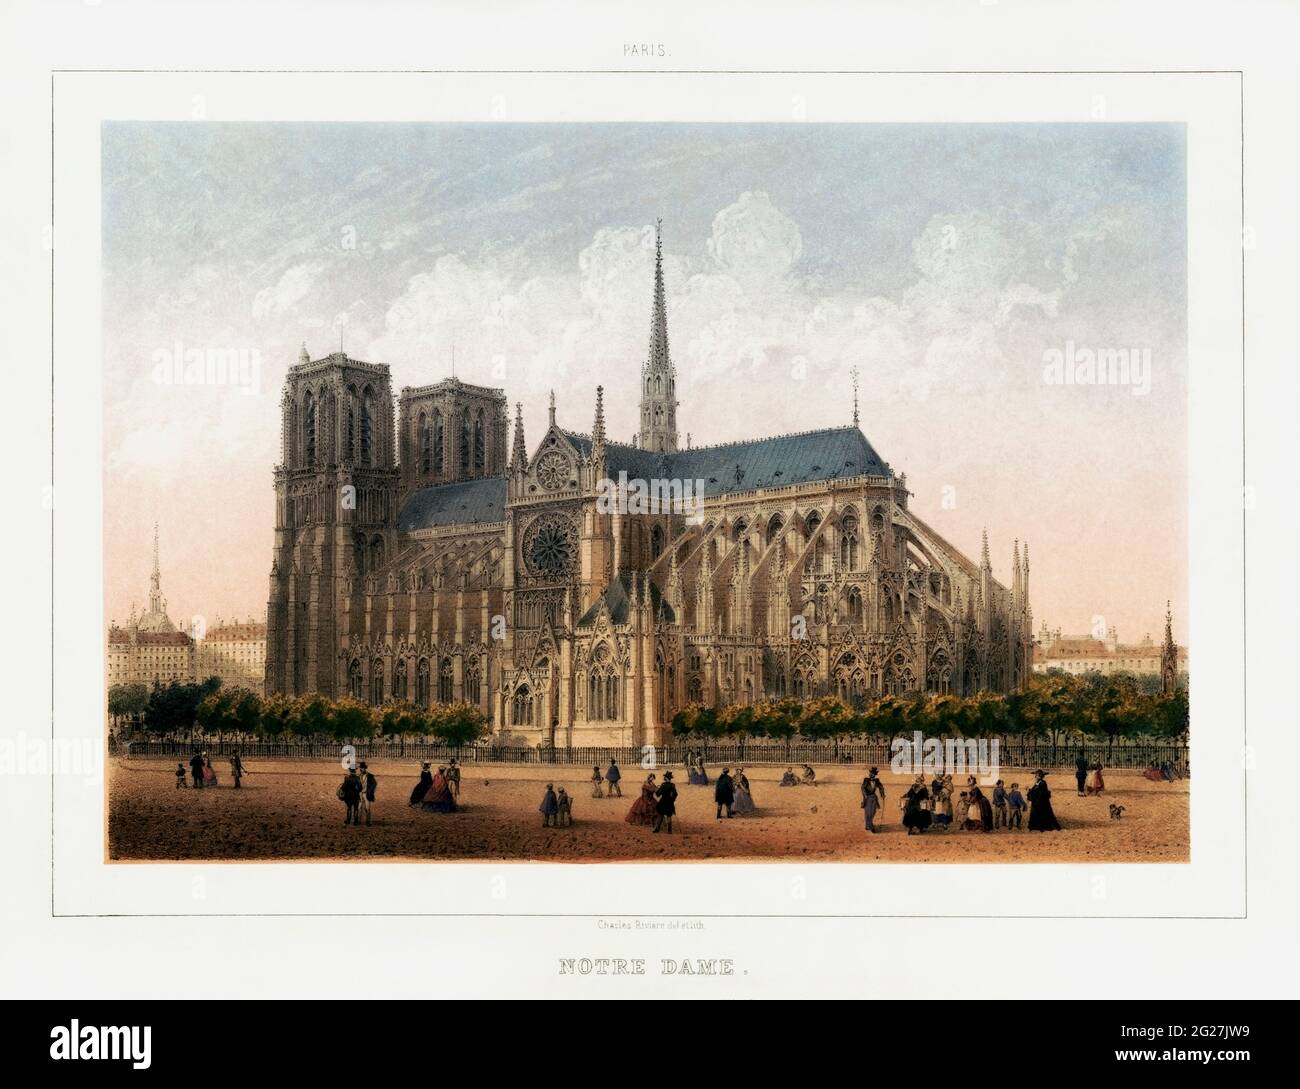 19th century print of Notre Dame de Paris, a medieval-age Catholic Cathedral in Paris, France. Stock Photo